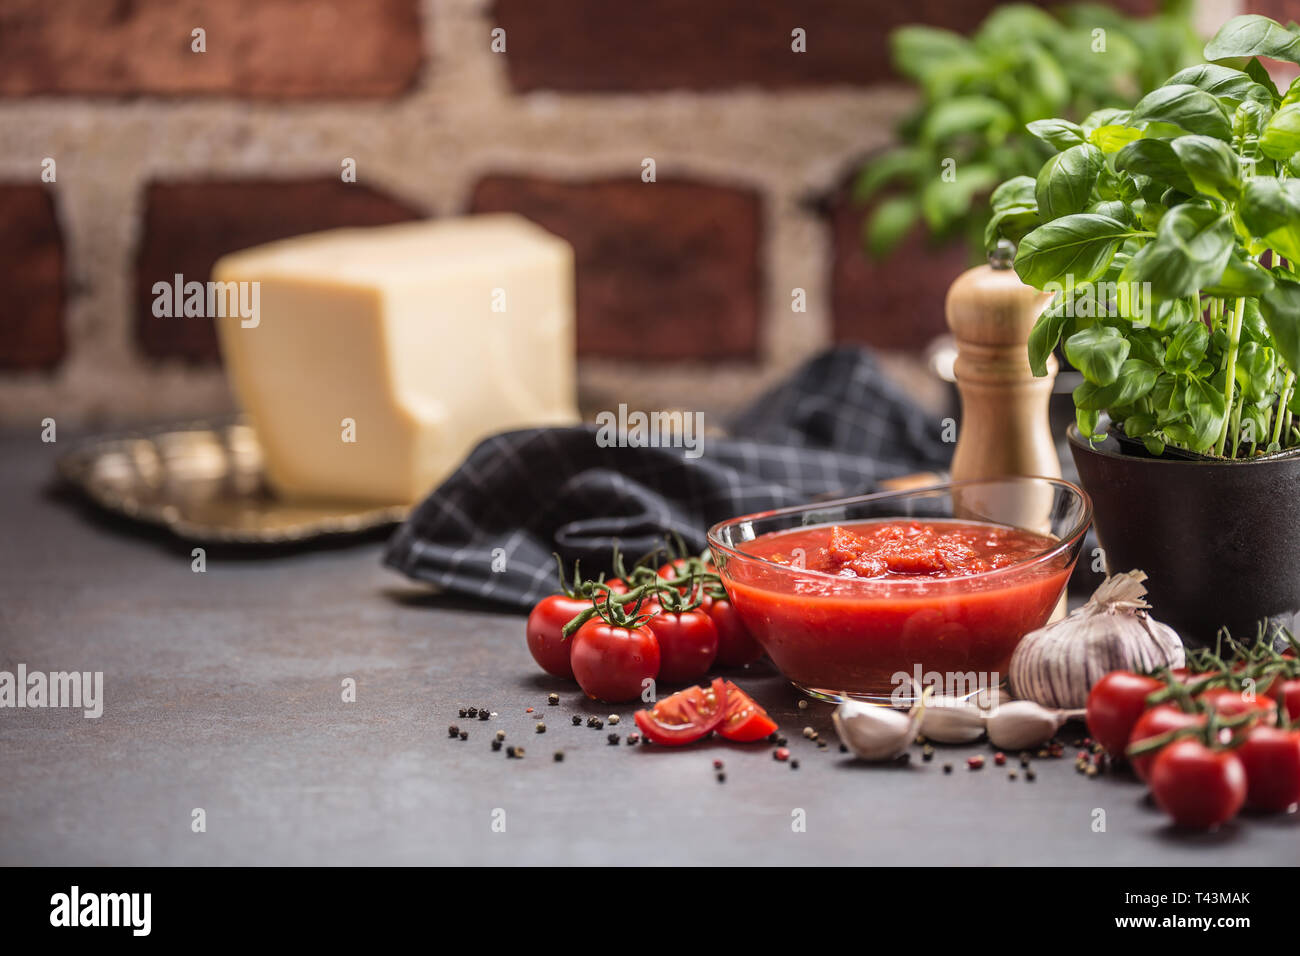 Tomato sauce tomatoes basil pasta spaghetti olive oil and parmesan. Stock Photo